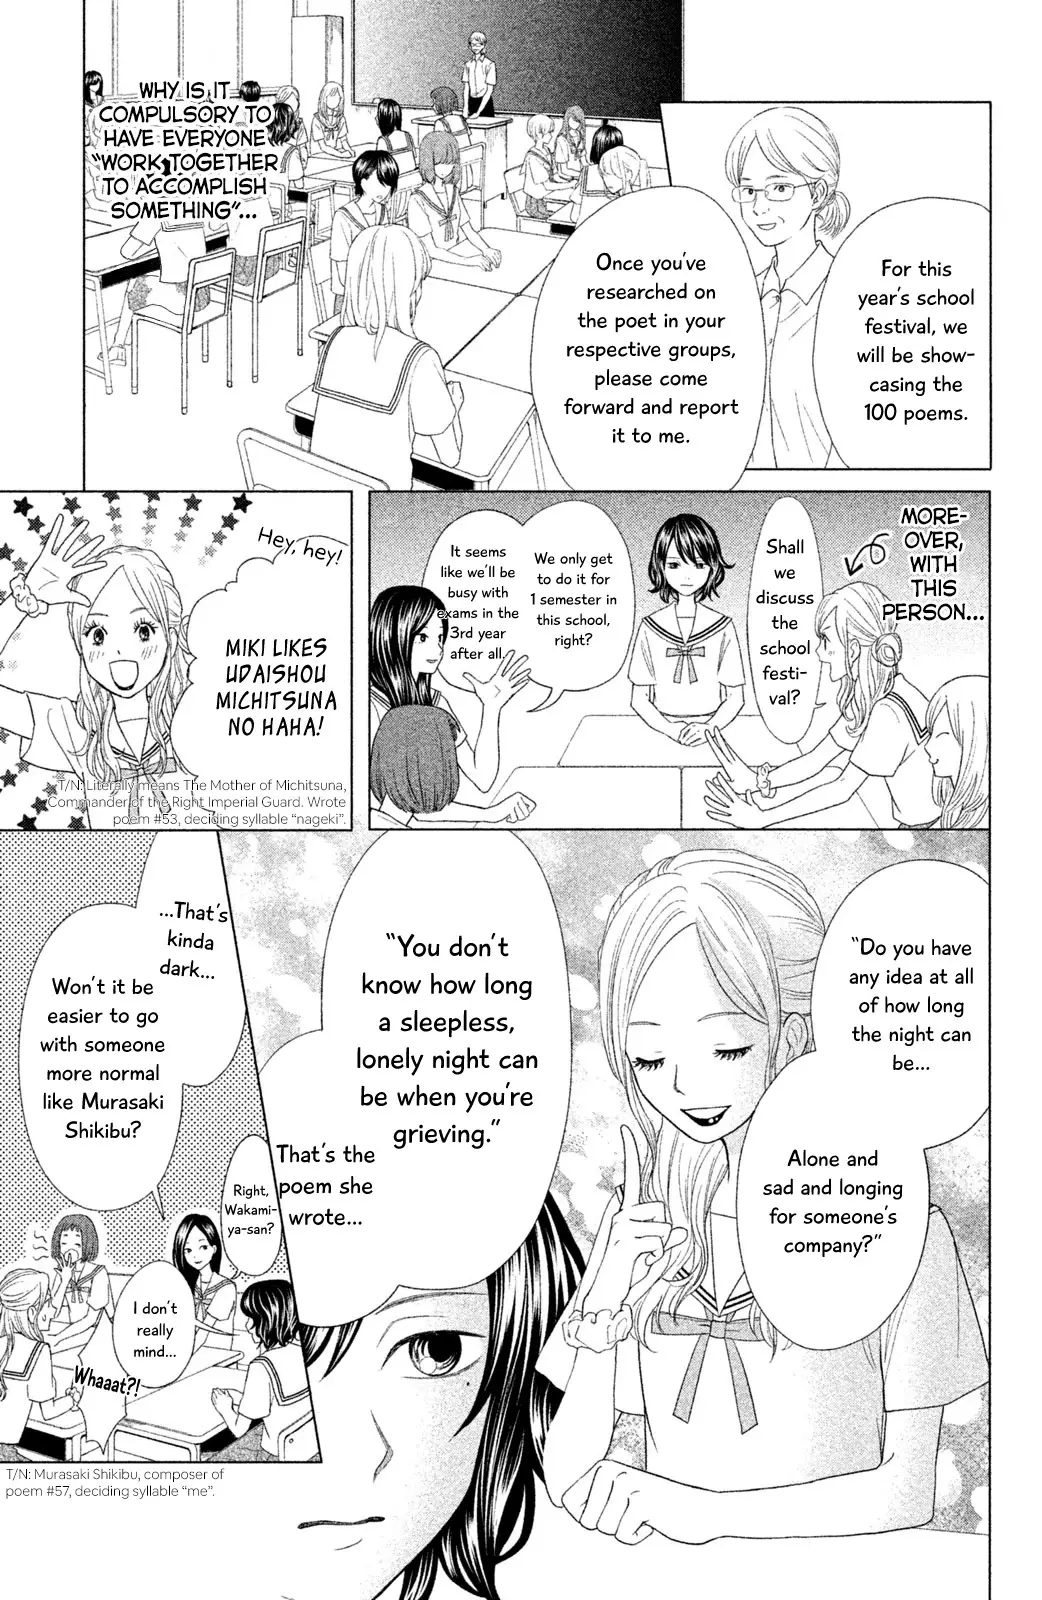 Chihayafuru: Middle School Arc - 12 page 4